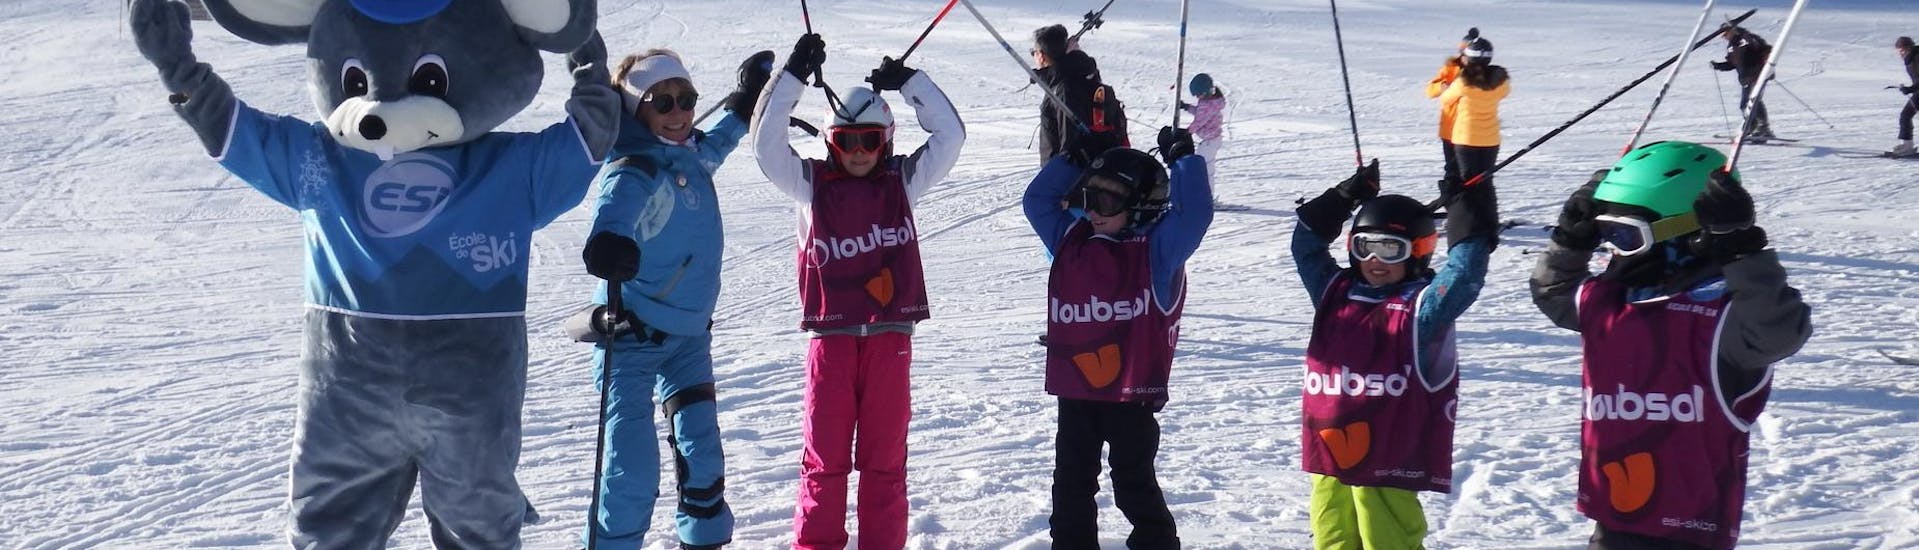 Kids Ski Lessons (5-12 y.) - Afternoon - Holidays - keep 4 reviews.